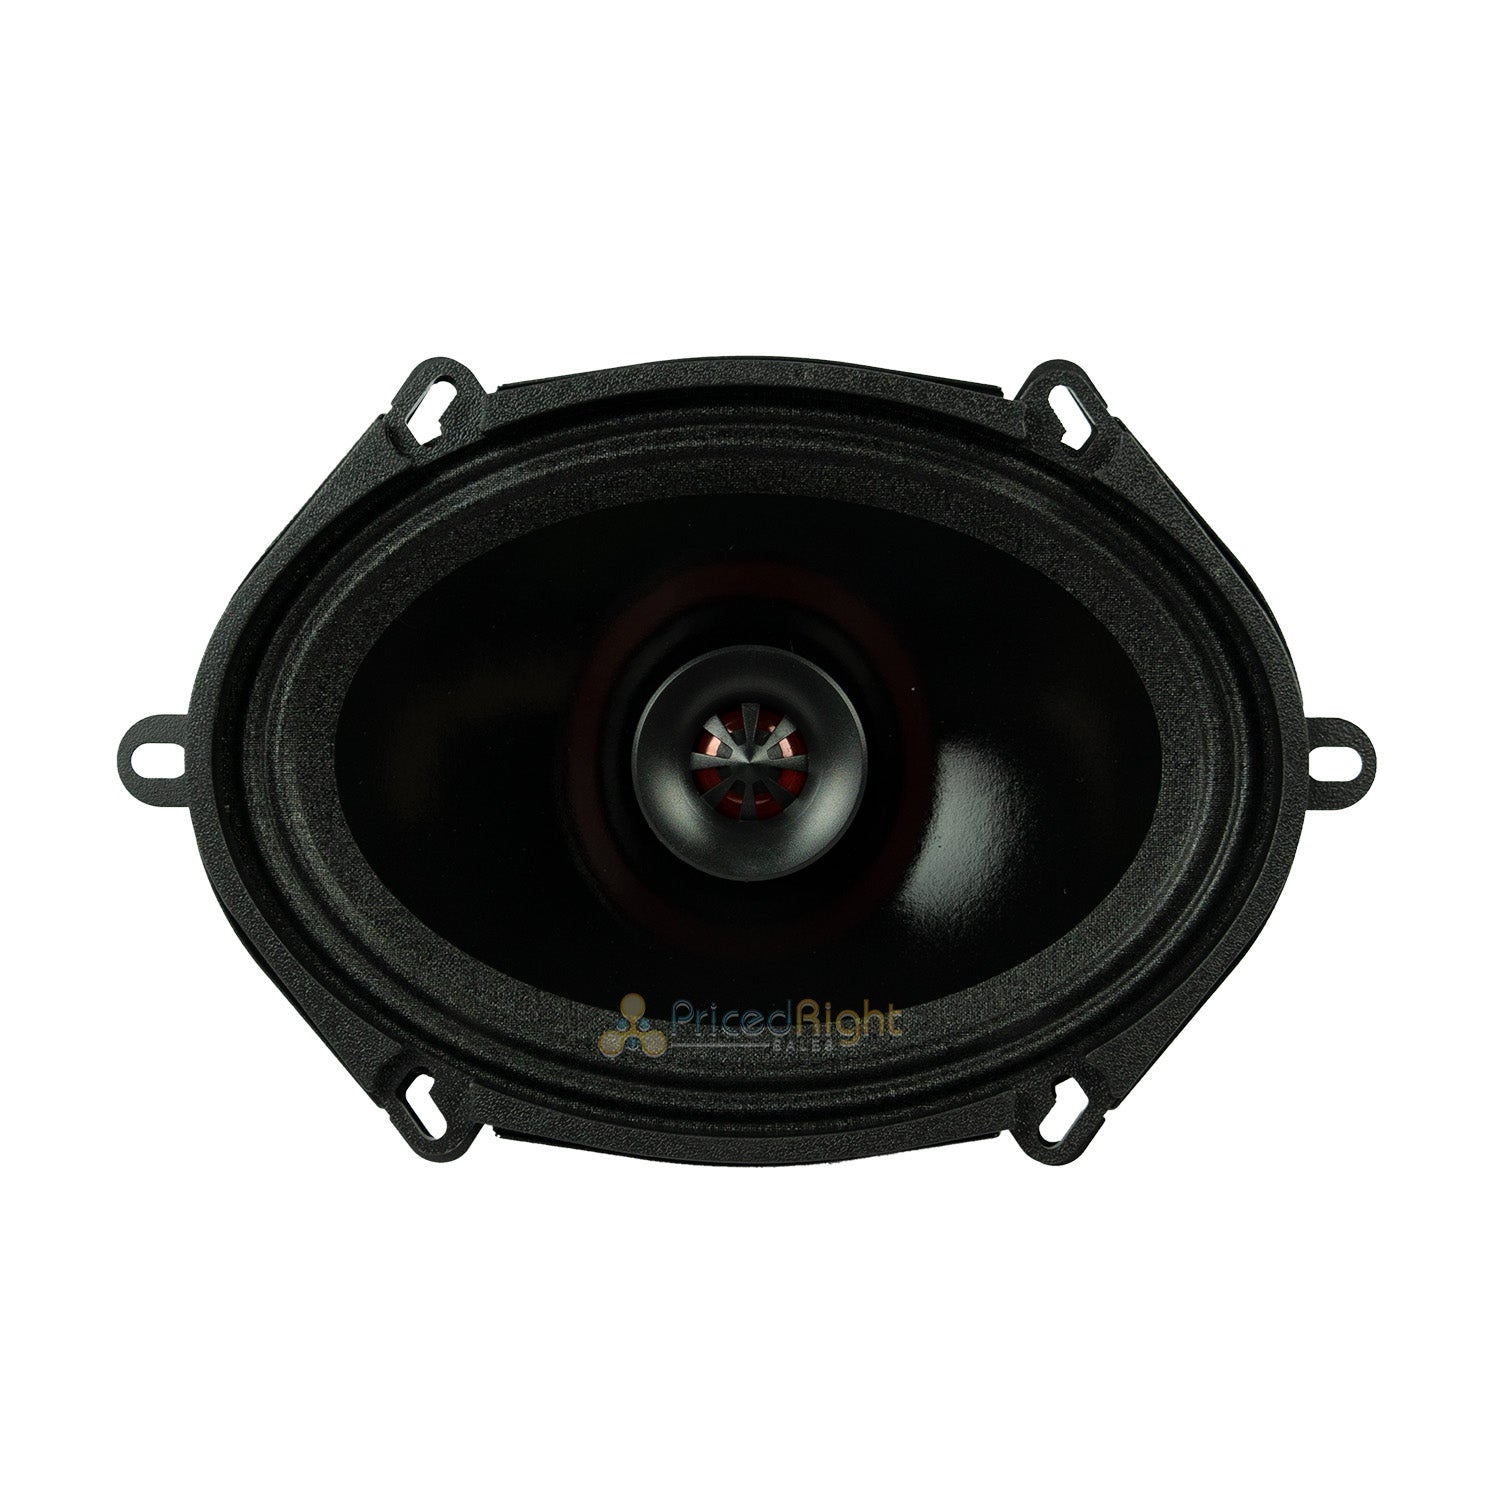 OKUR 5 x 7" 2-Way Coaxial Speakers 350 Watts Max Power 1" KSV 4 Ohm OS57 Pair